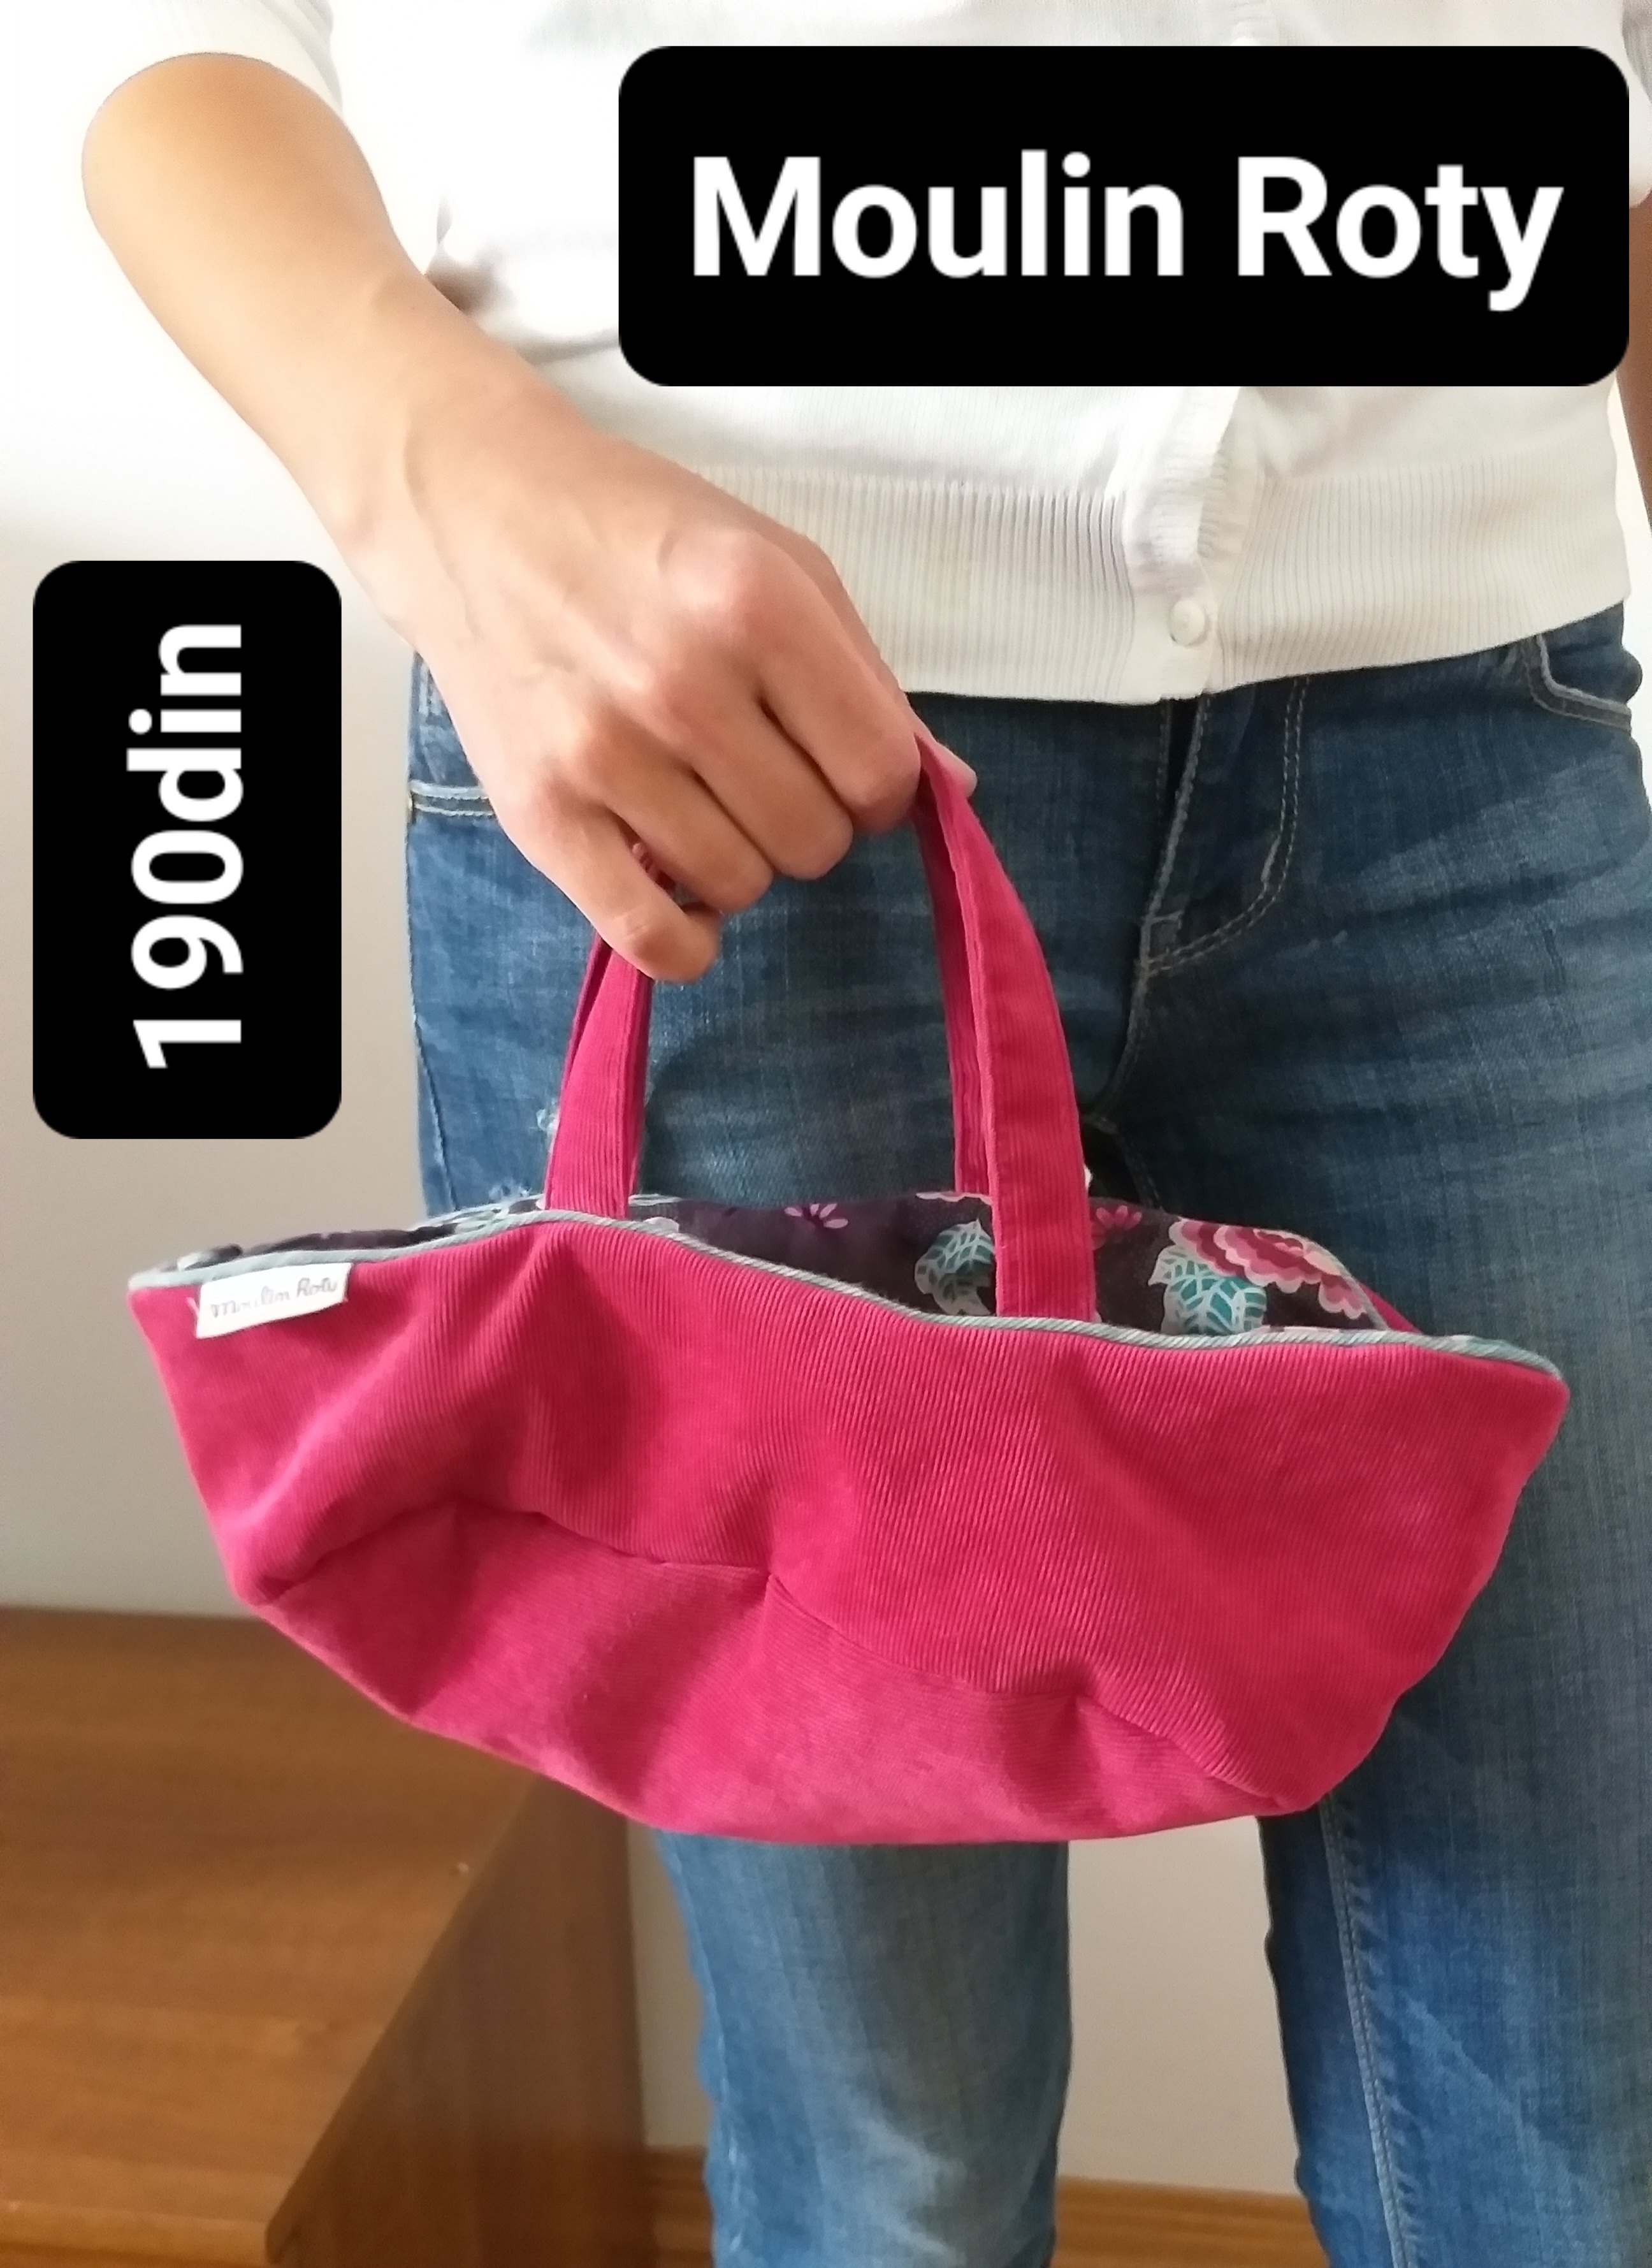 Moulin Roty dečija torbica za devojčice roze boje